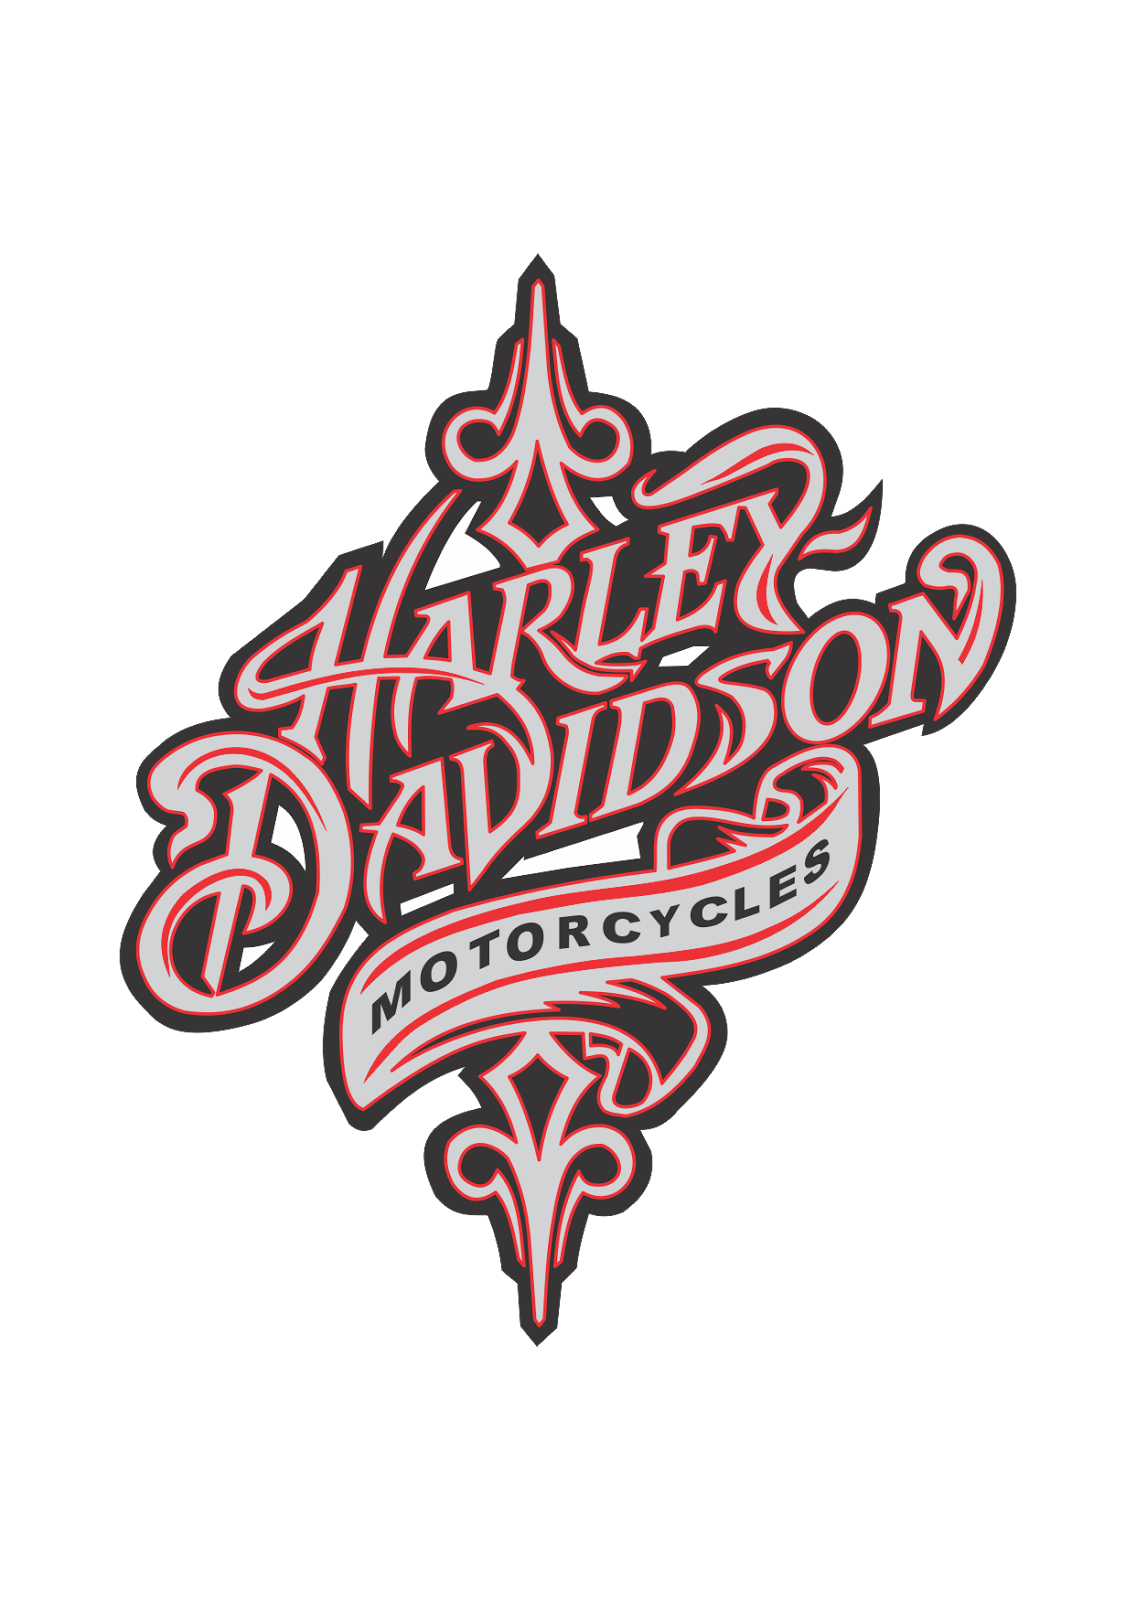  Harley  davidson  motorcycles Logo  Vector  Motorcycle 